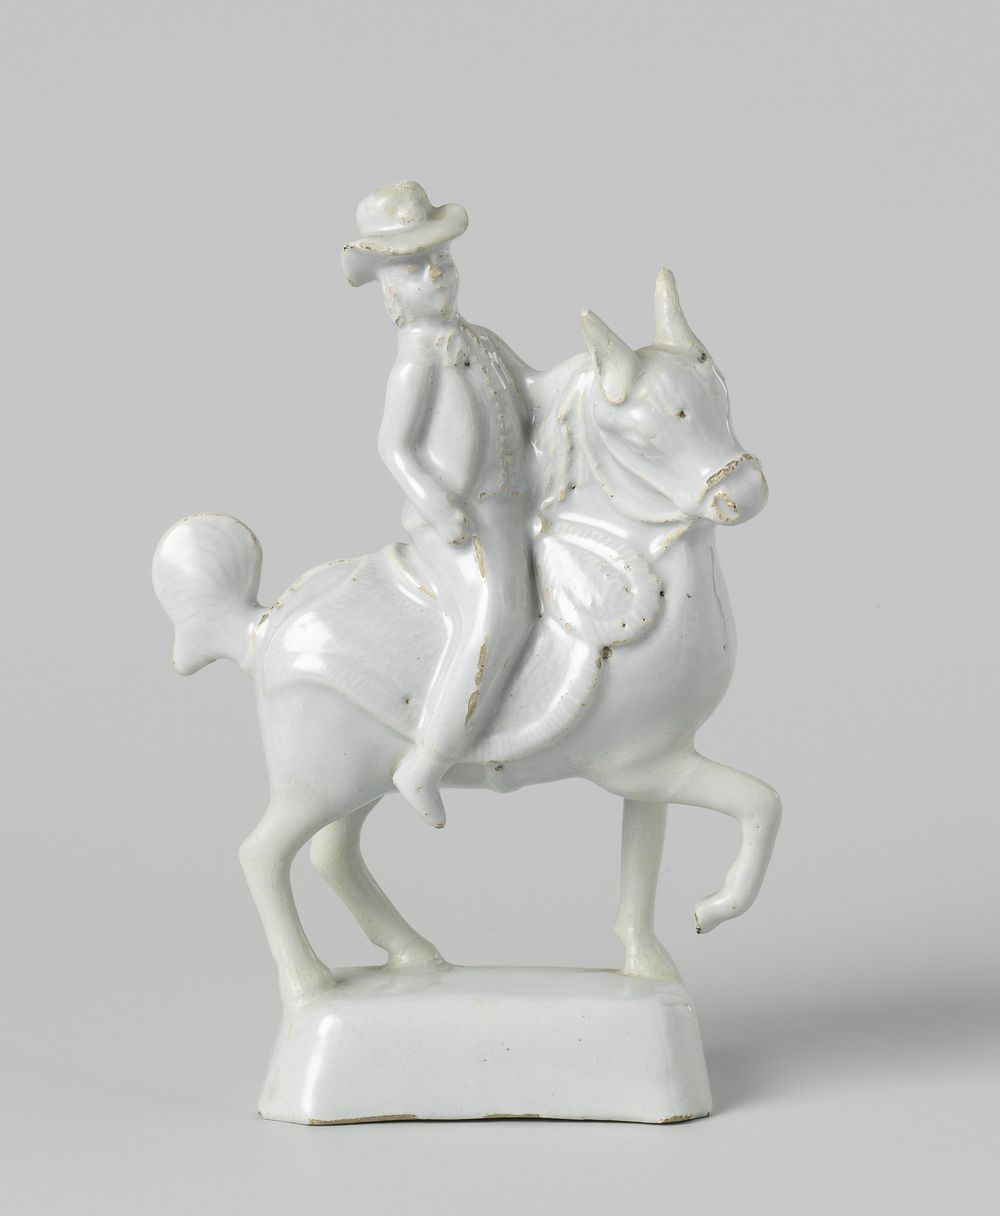 Ruiter te paard (c. 1780 - c. 1820) by anonymous